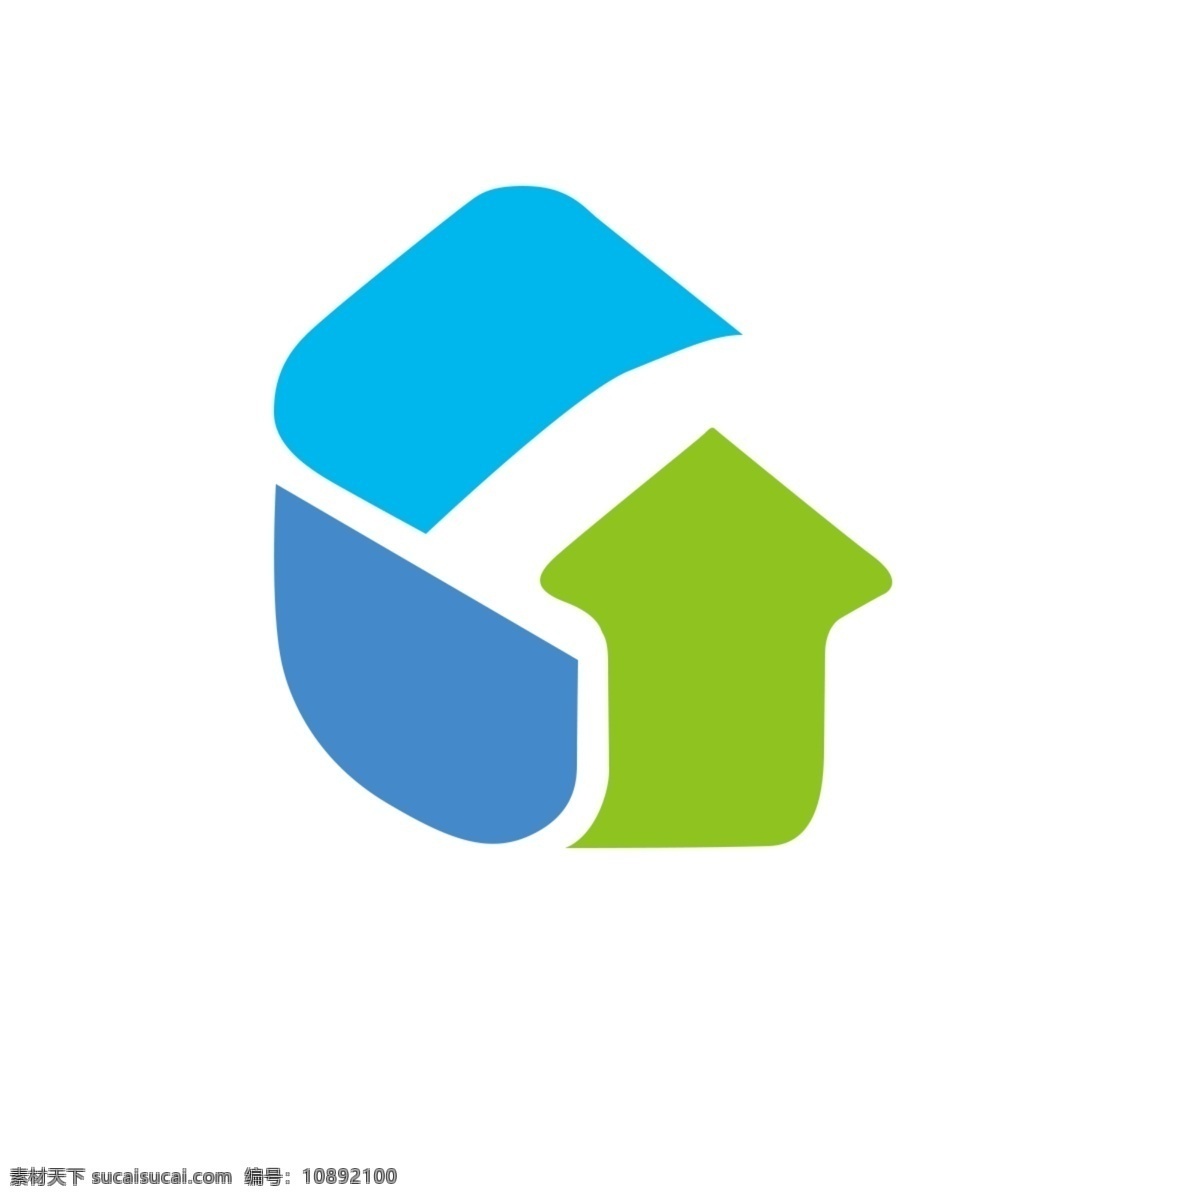 g 字母 logo 循环环保 环保 循环 绿色 白色